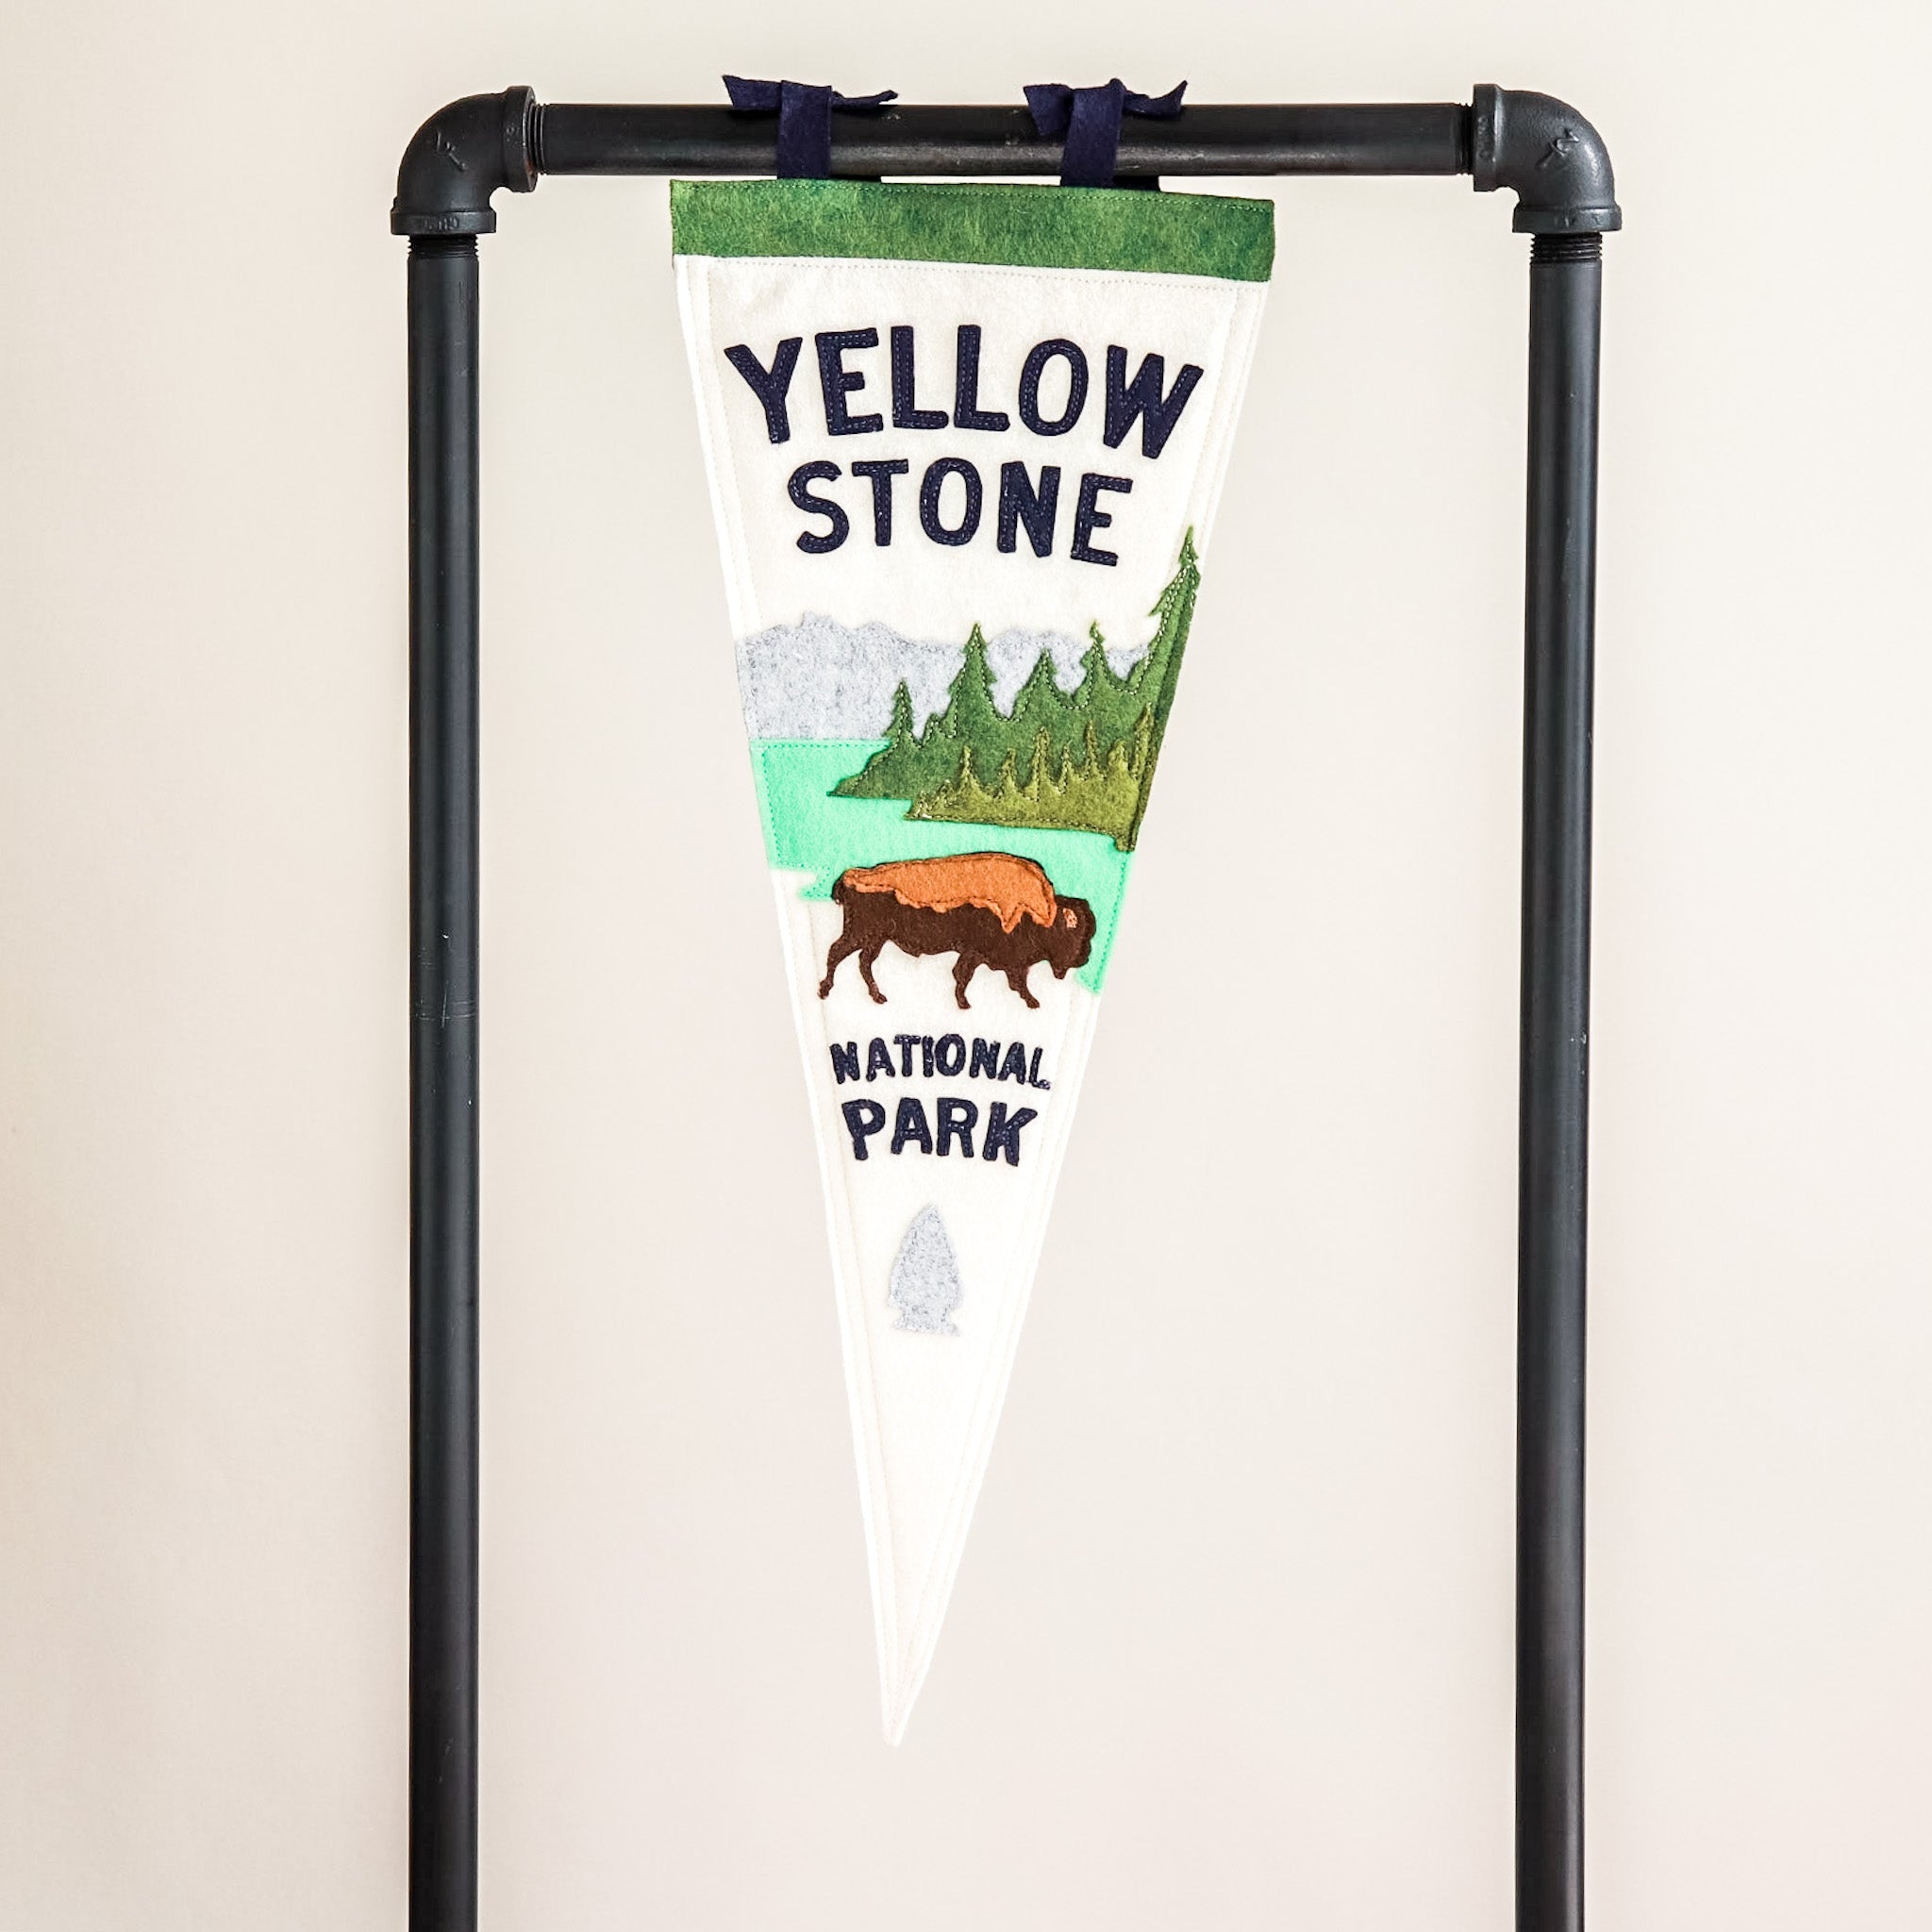 Yellowstone National Park Buffalo Arrowhead Patch by The Hamilton Grou –  Montana Gift Corral